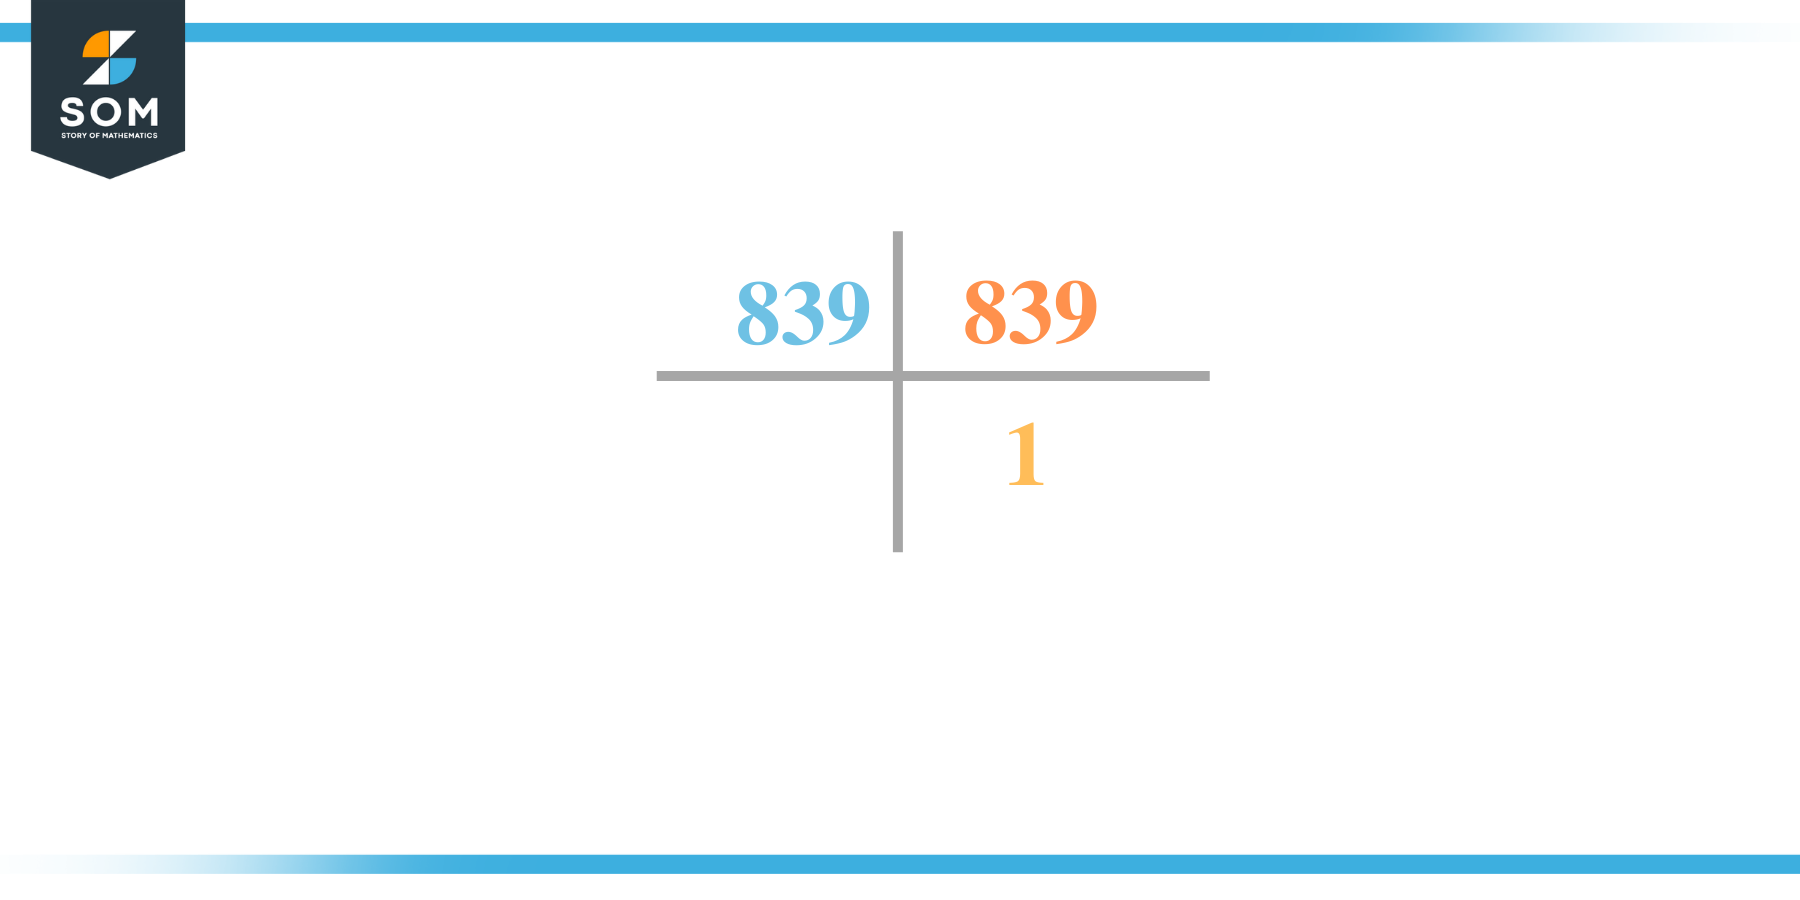 Prime factorization of 839